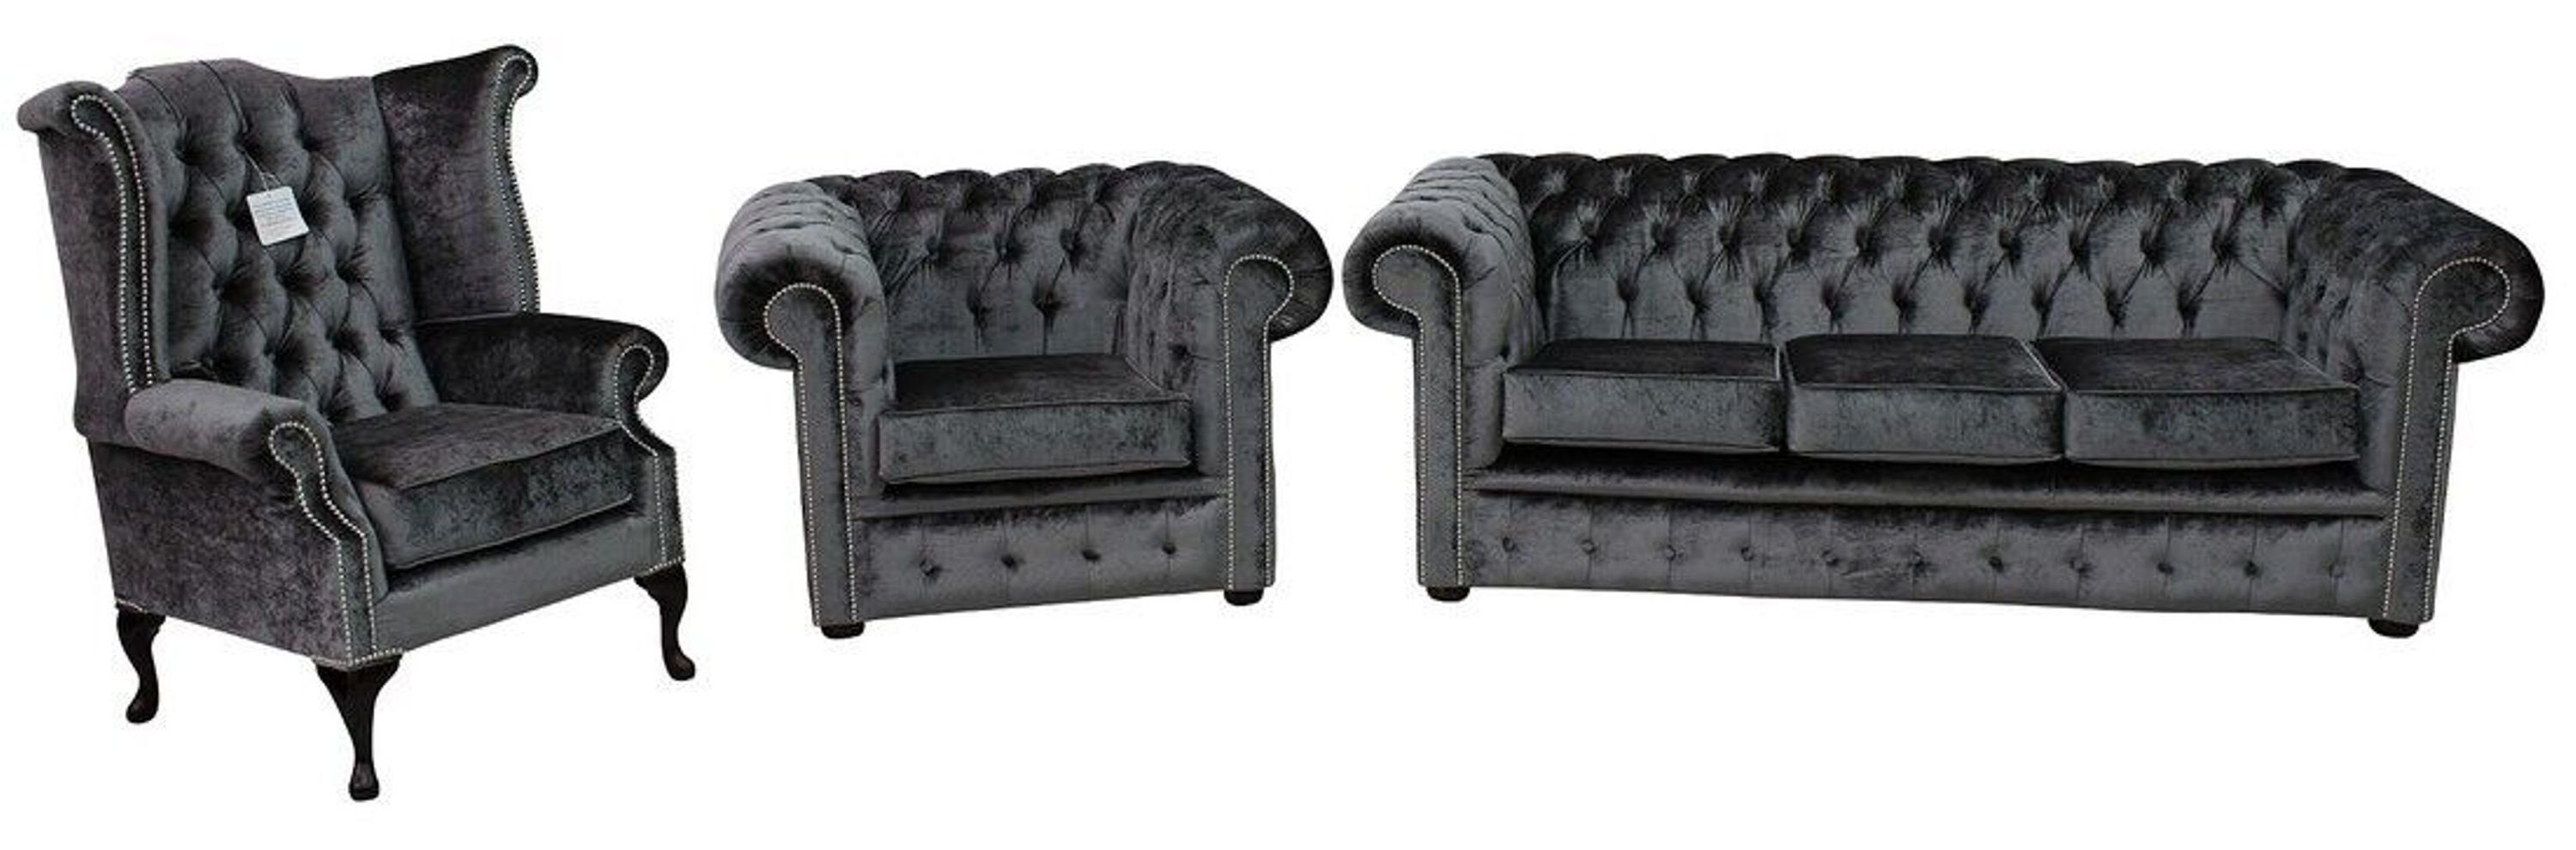 Graue Sofa Set, Chesterfield Sofagarnitur in JVmoebel Made Chesterfield Europe Komplett Textil